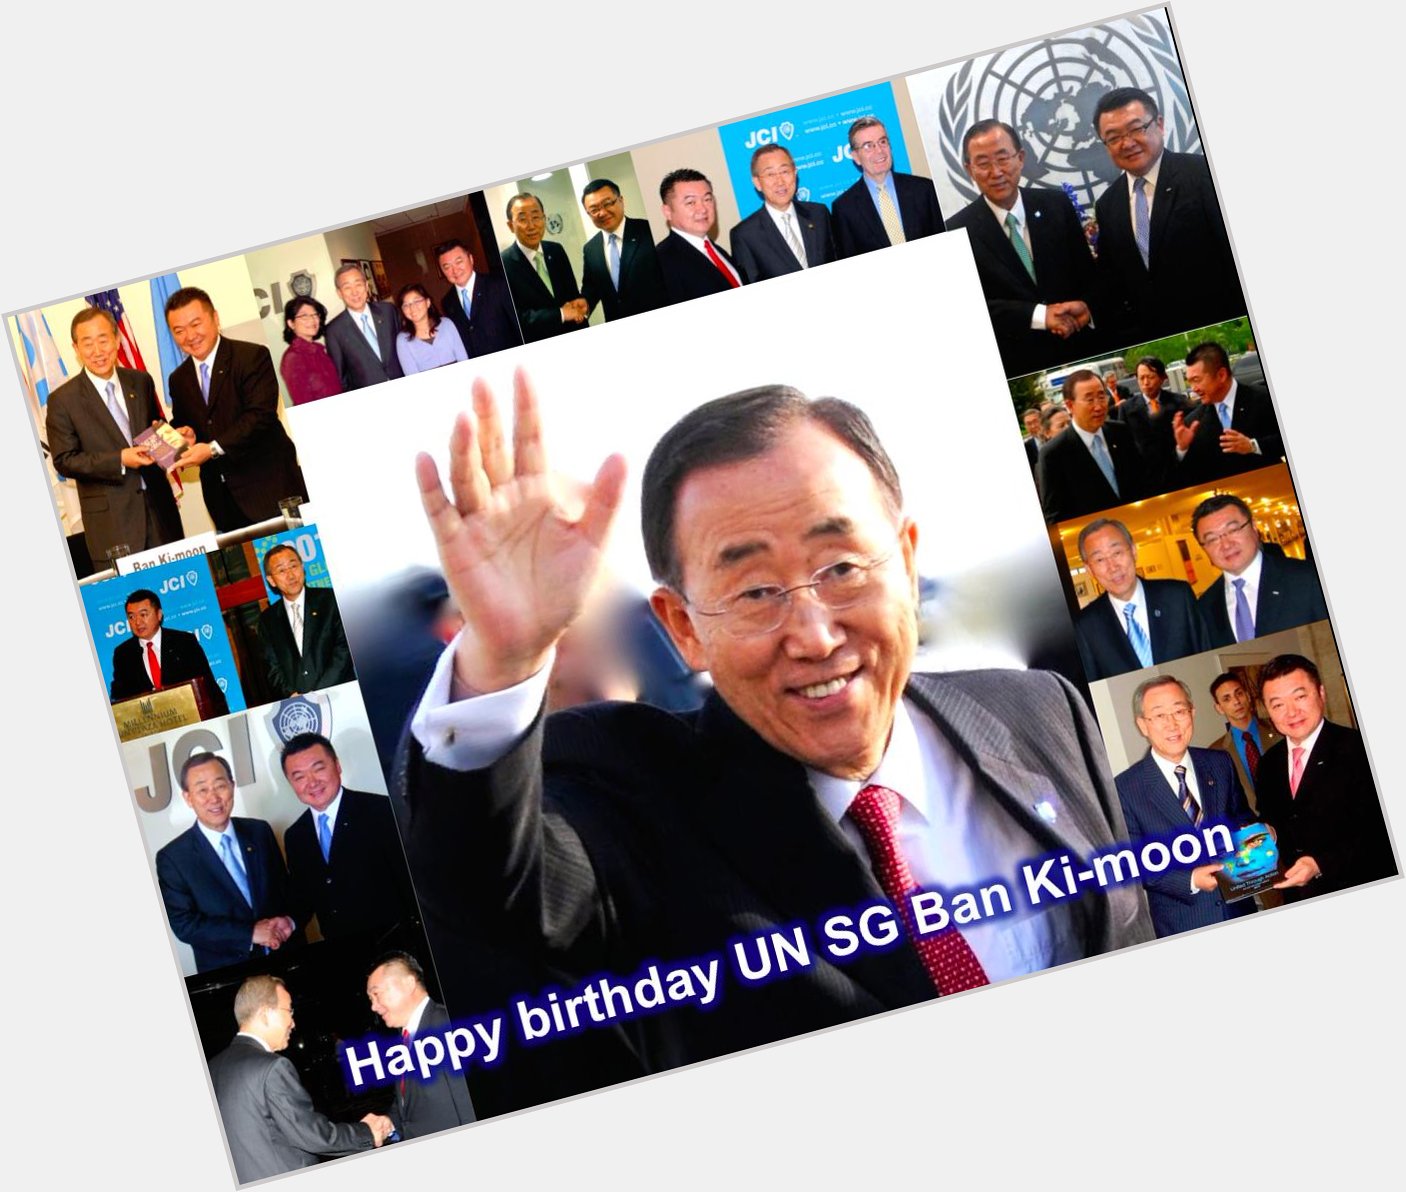       June 13: Happy Bday UN SG Ban Ki-moon 